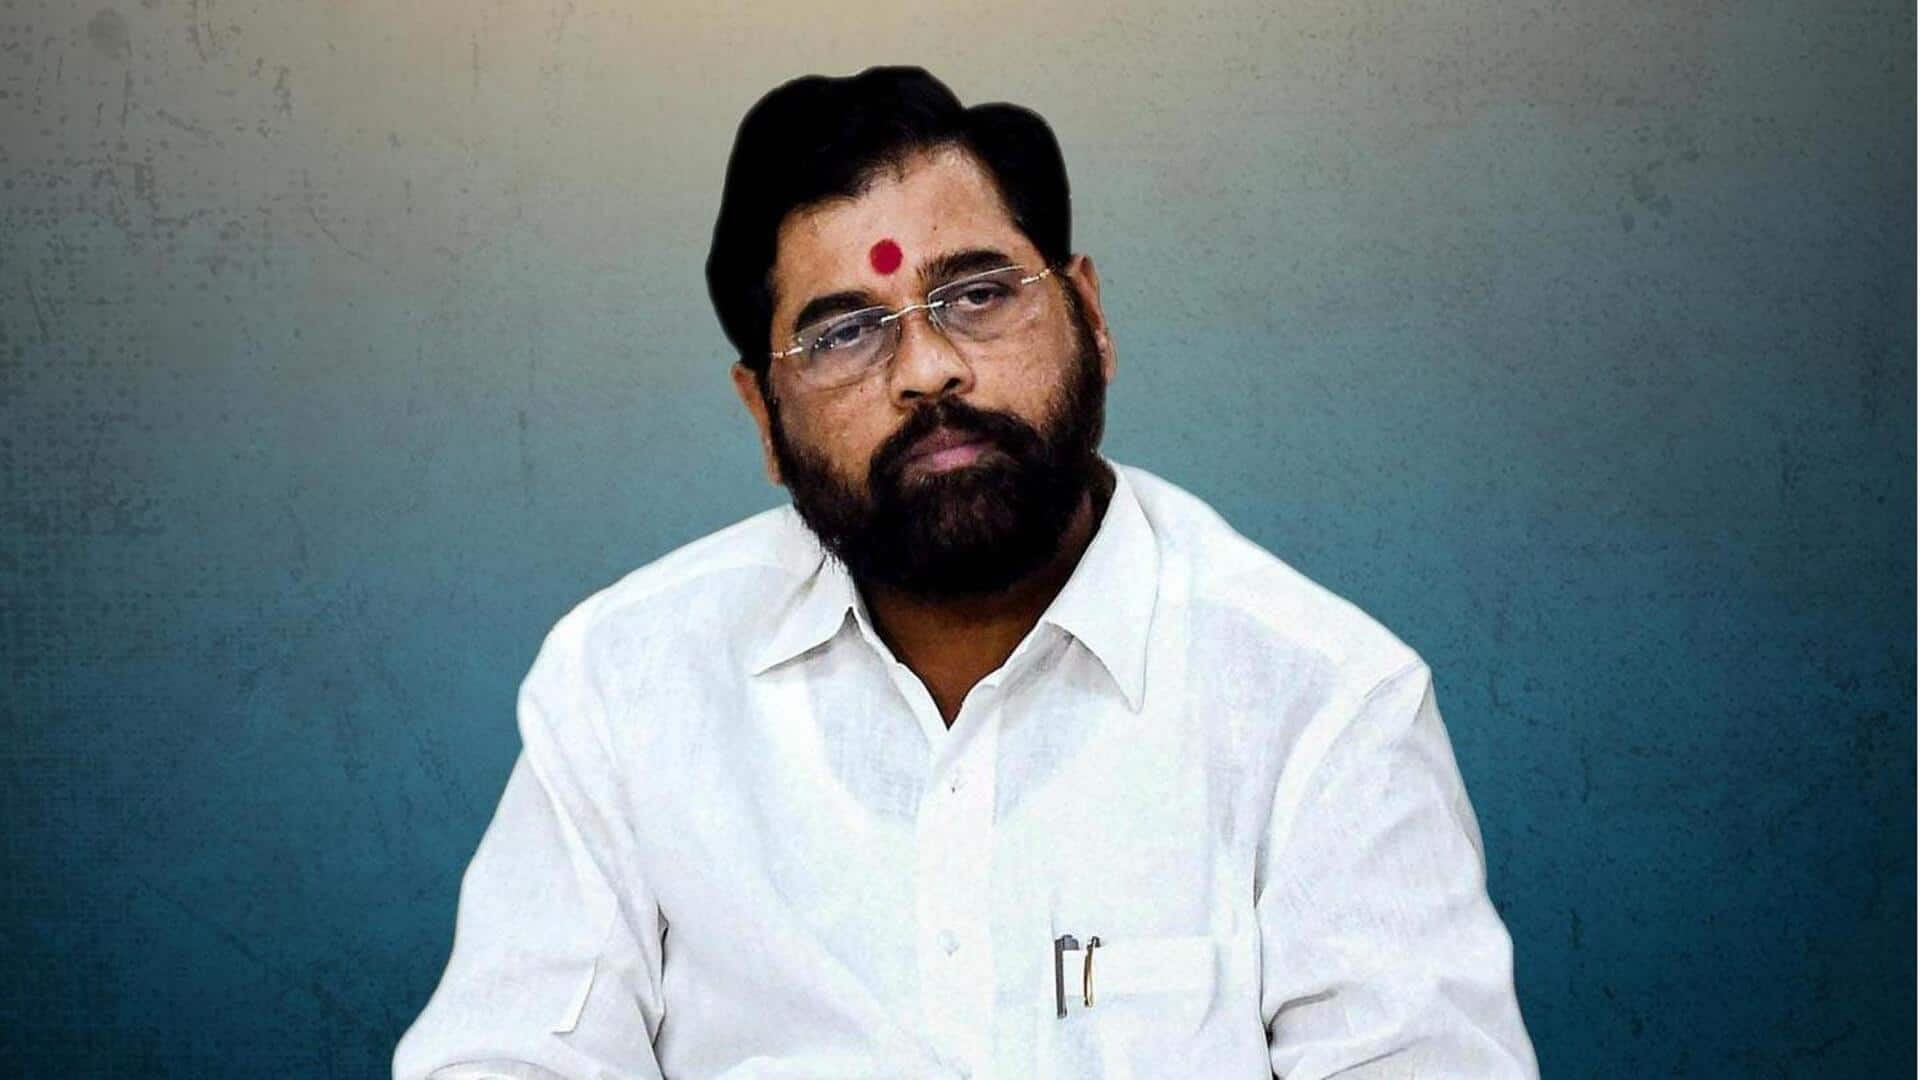 Maharashtra: Man booked for passing obscene comment against CM Shinde